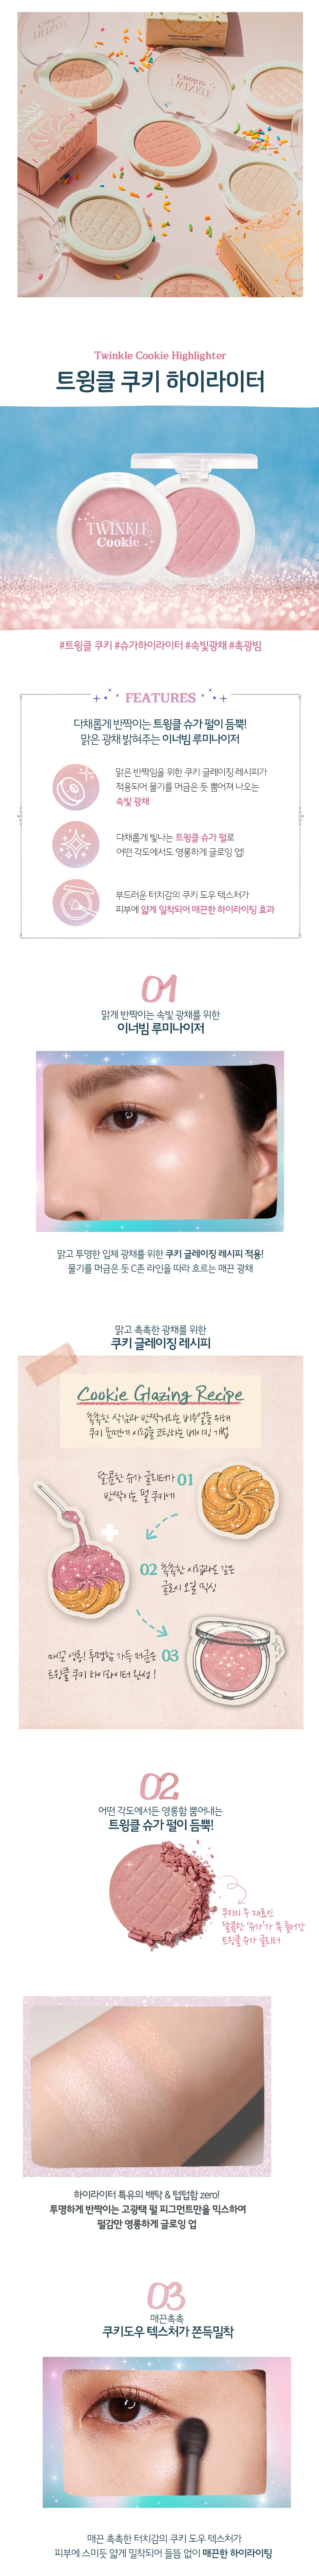 Skinfood Twinkle Cookie Highlighter korean skincare product online shop malaysia china macau1